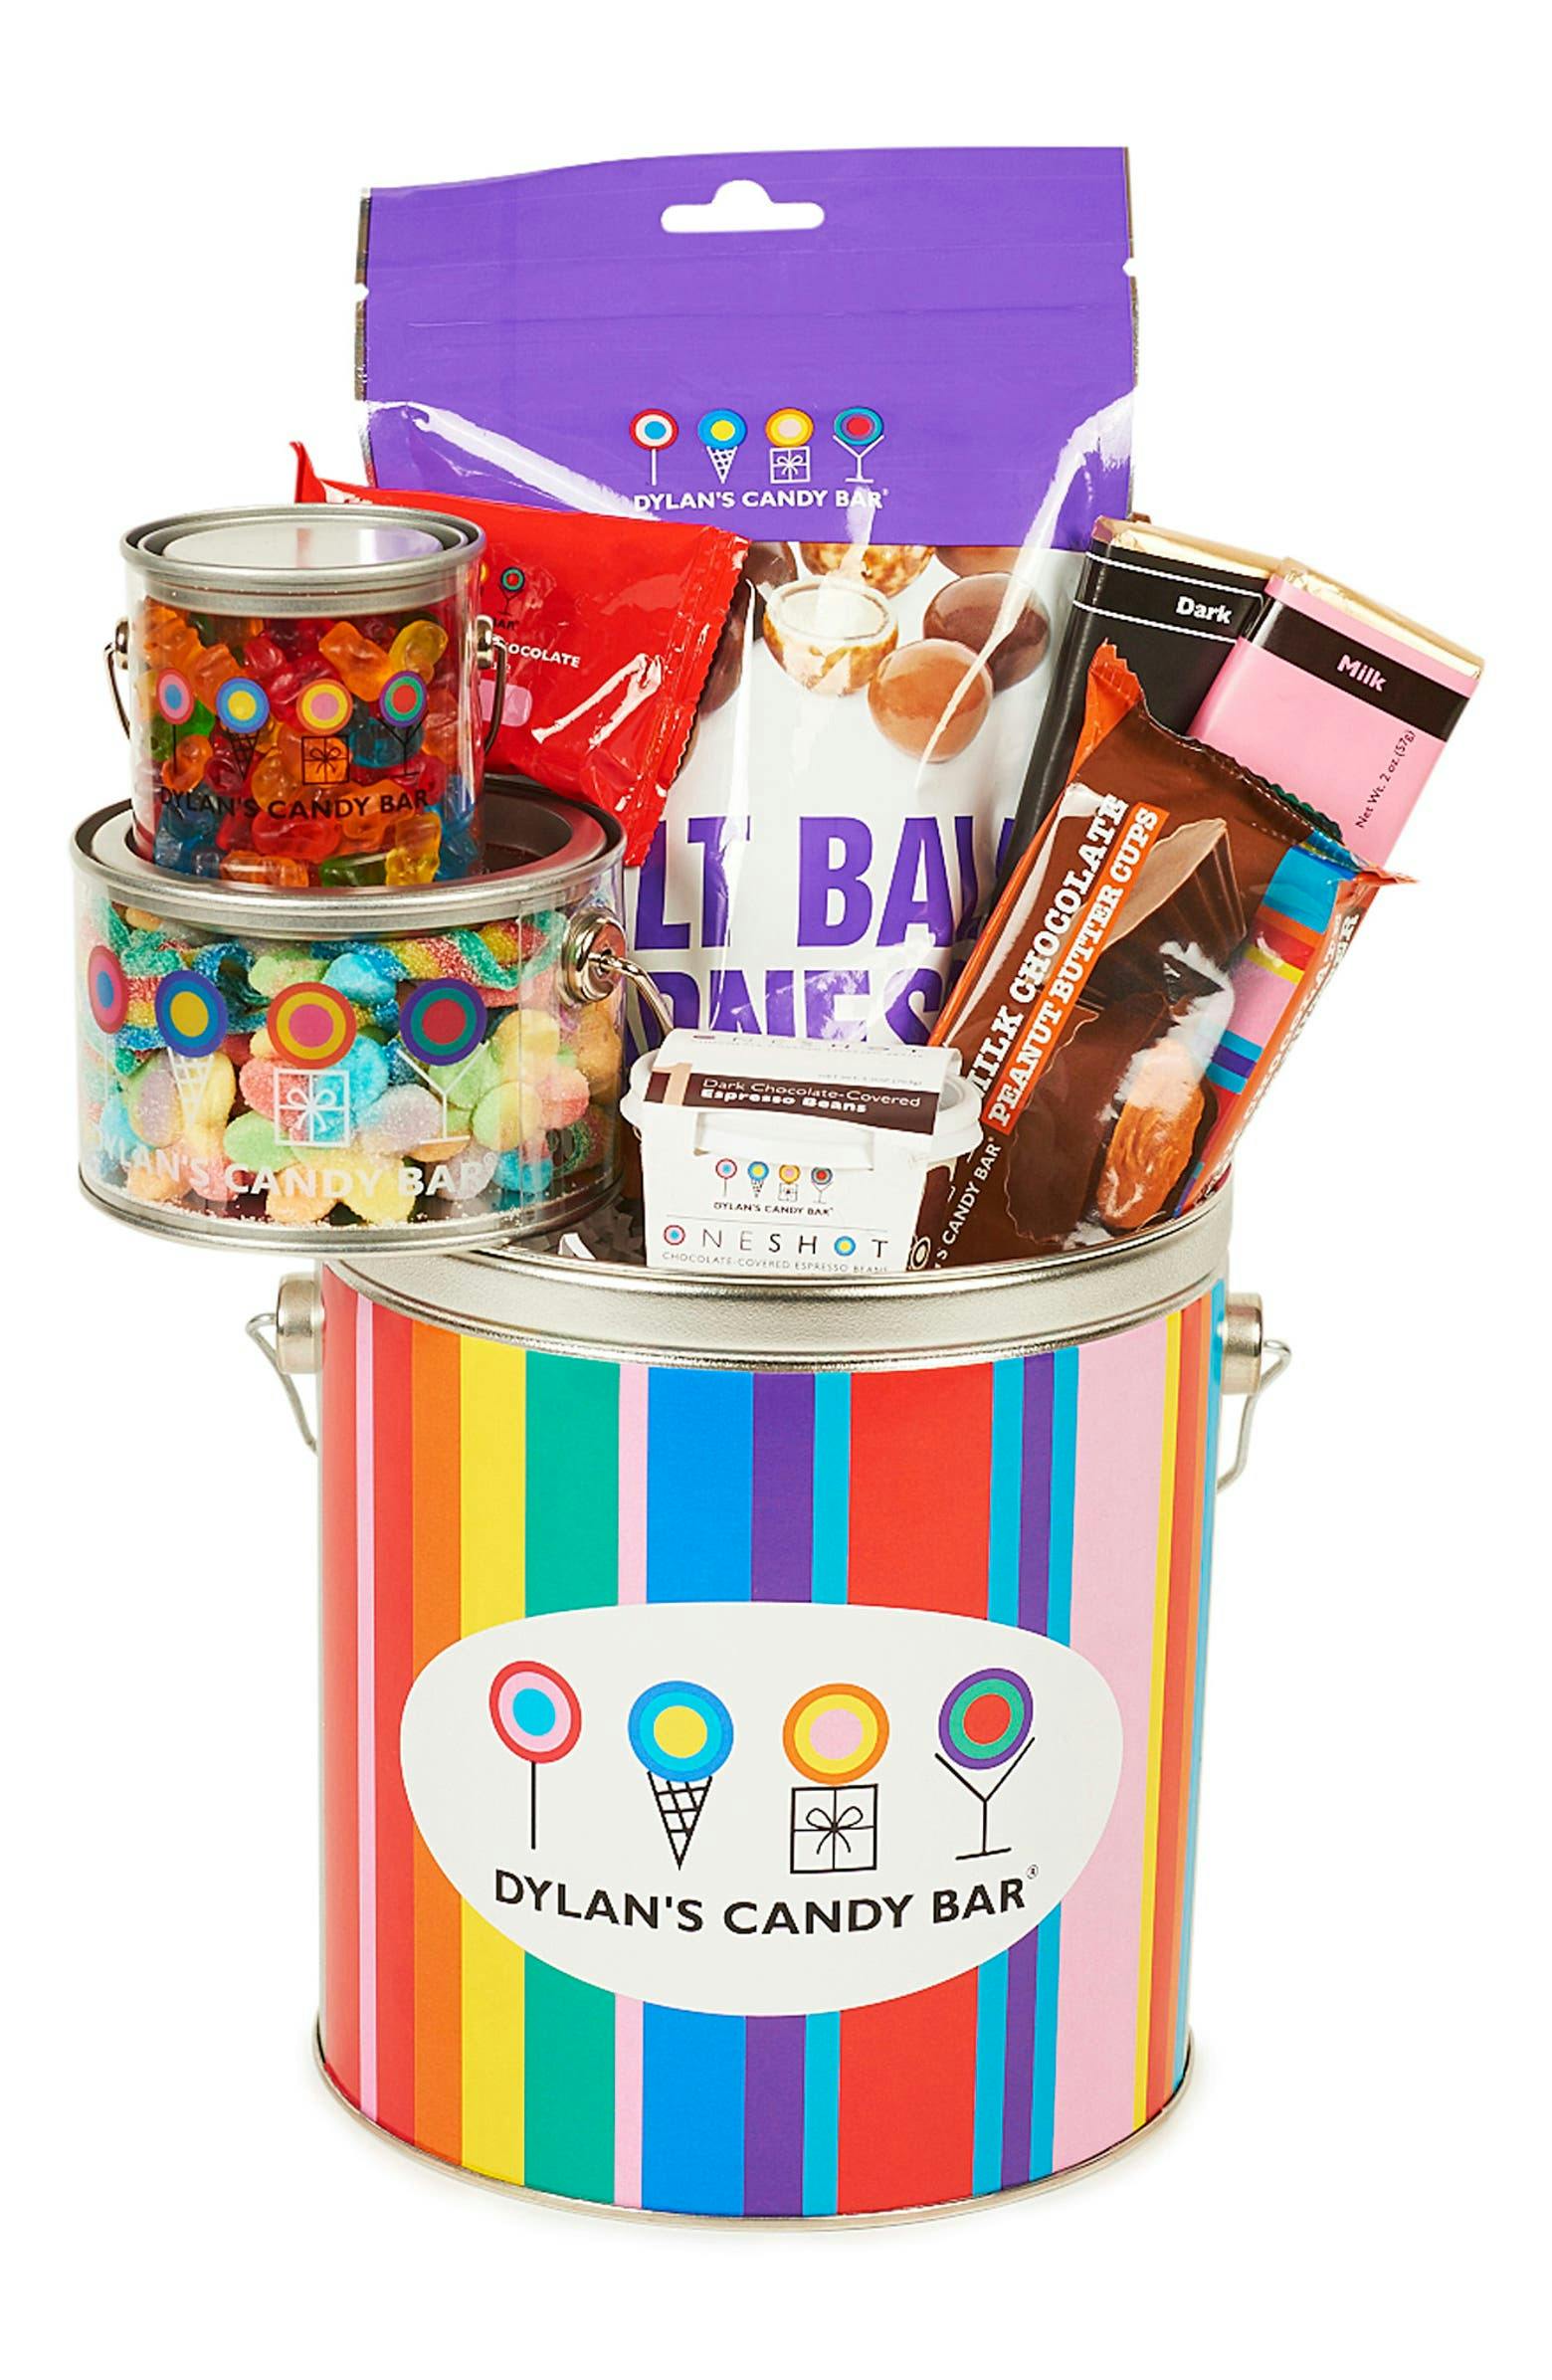 Dylans candy bar sample bucket